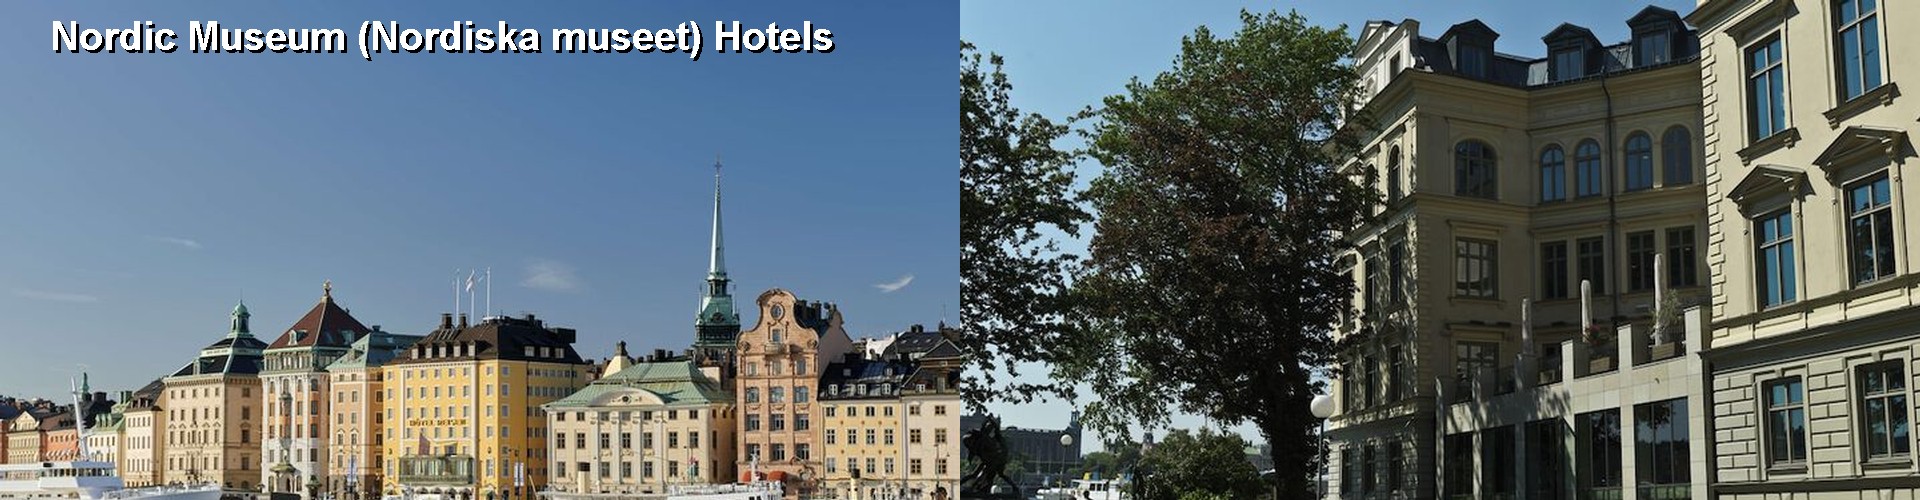 5 Best Hotels near Nordic Museum (Nordiska museet)